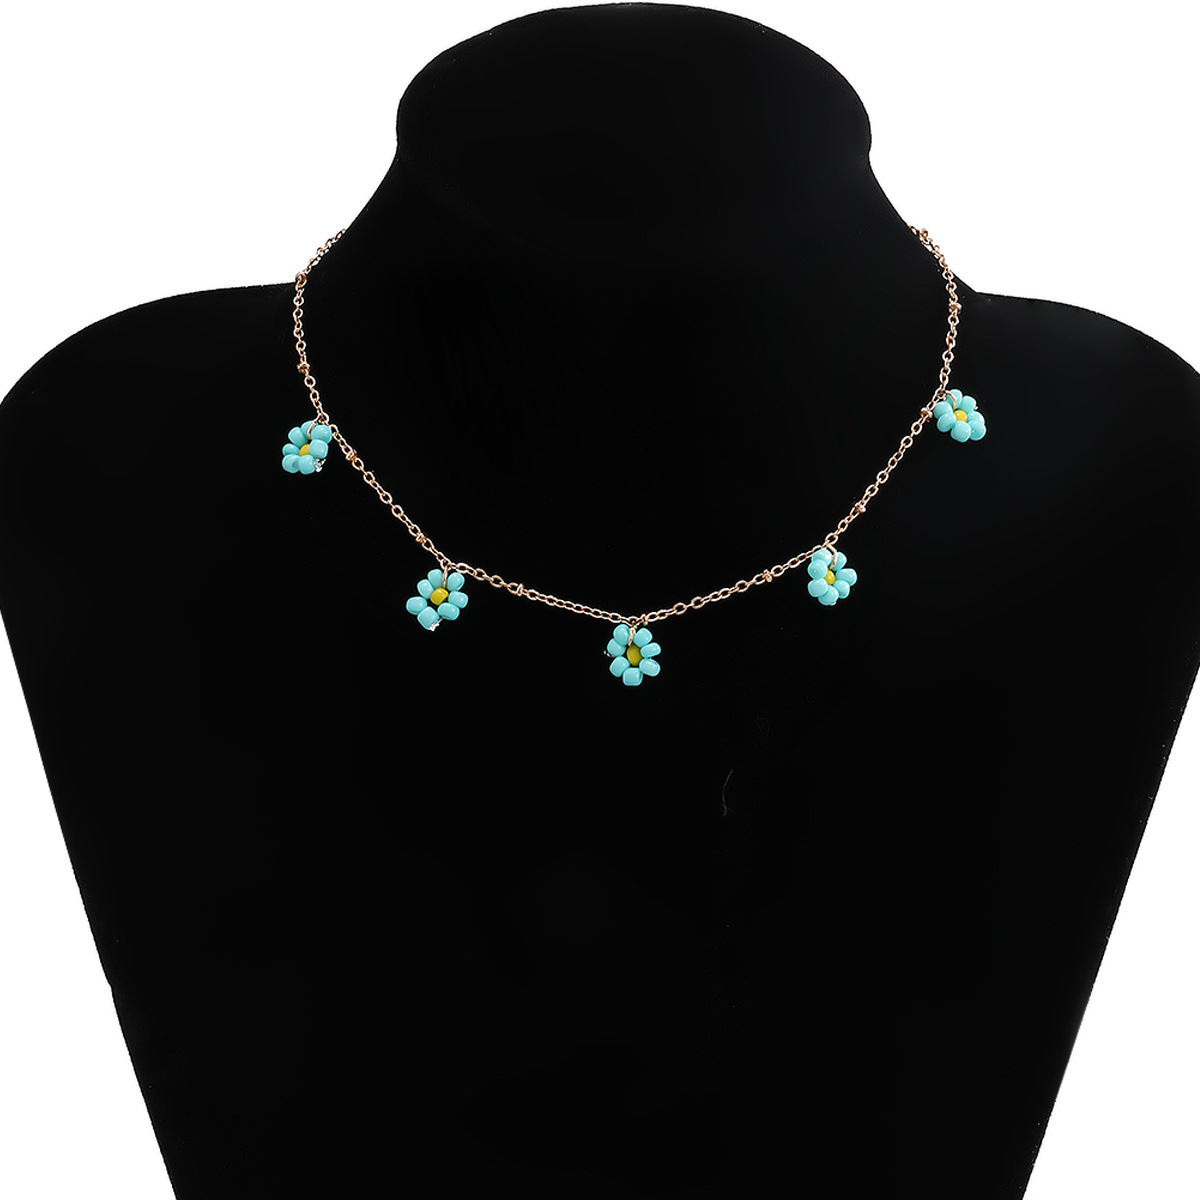 2:necklace Light blue